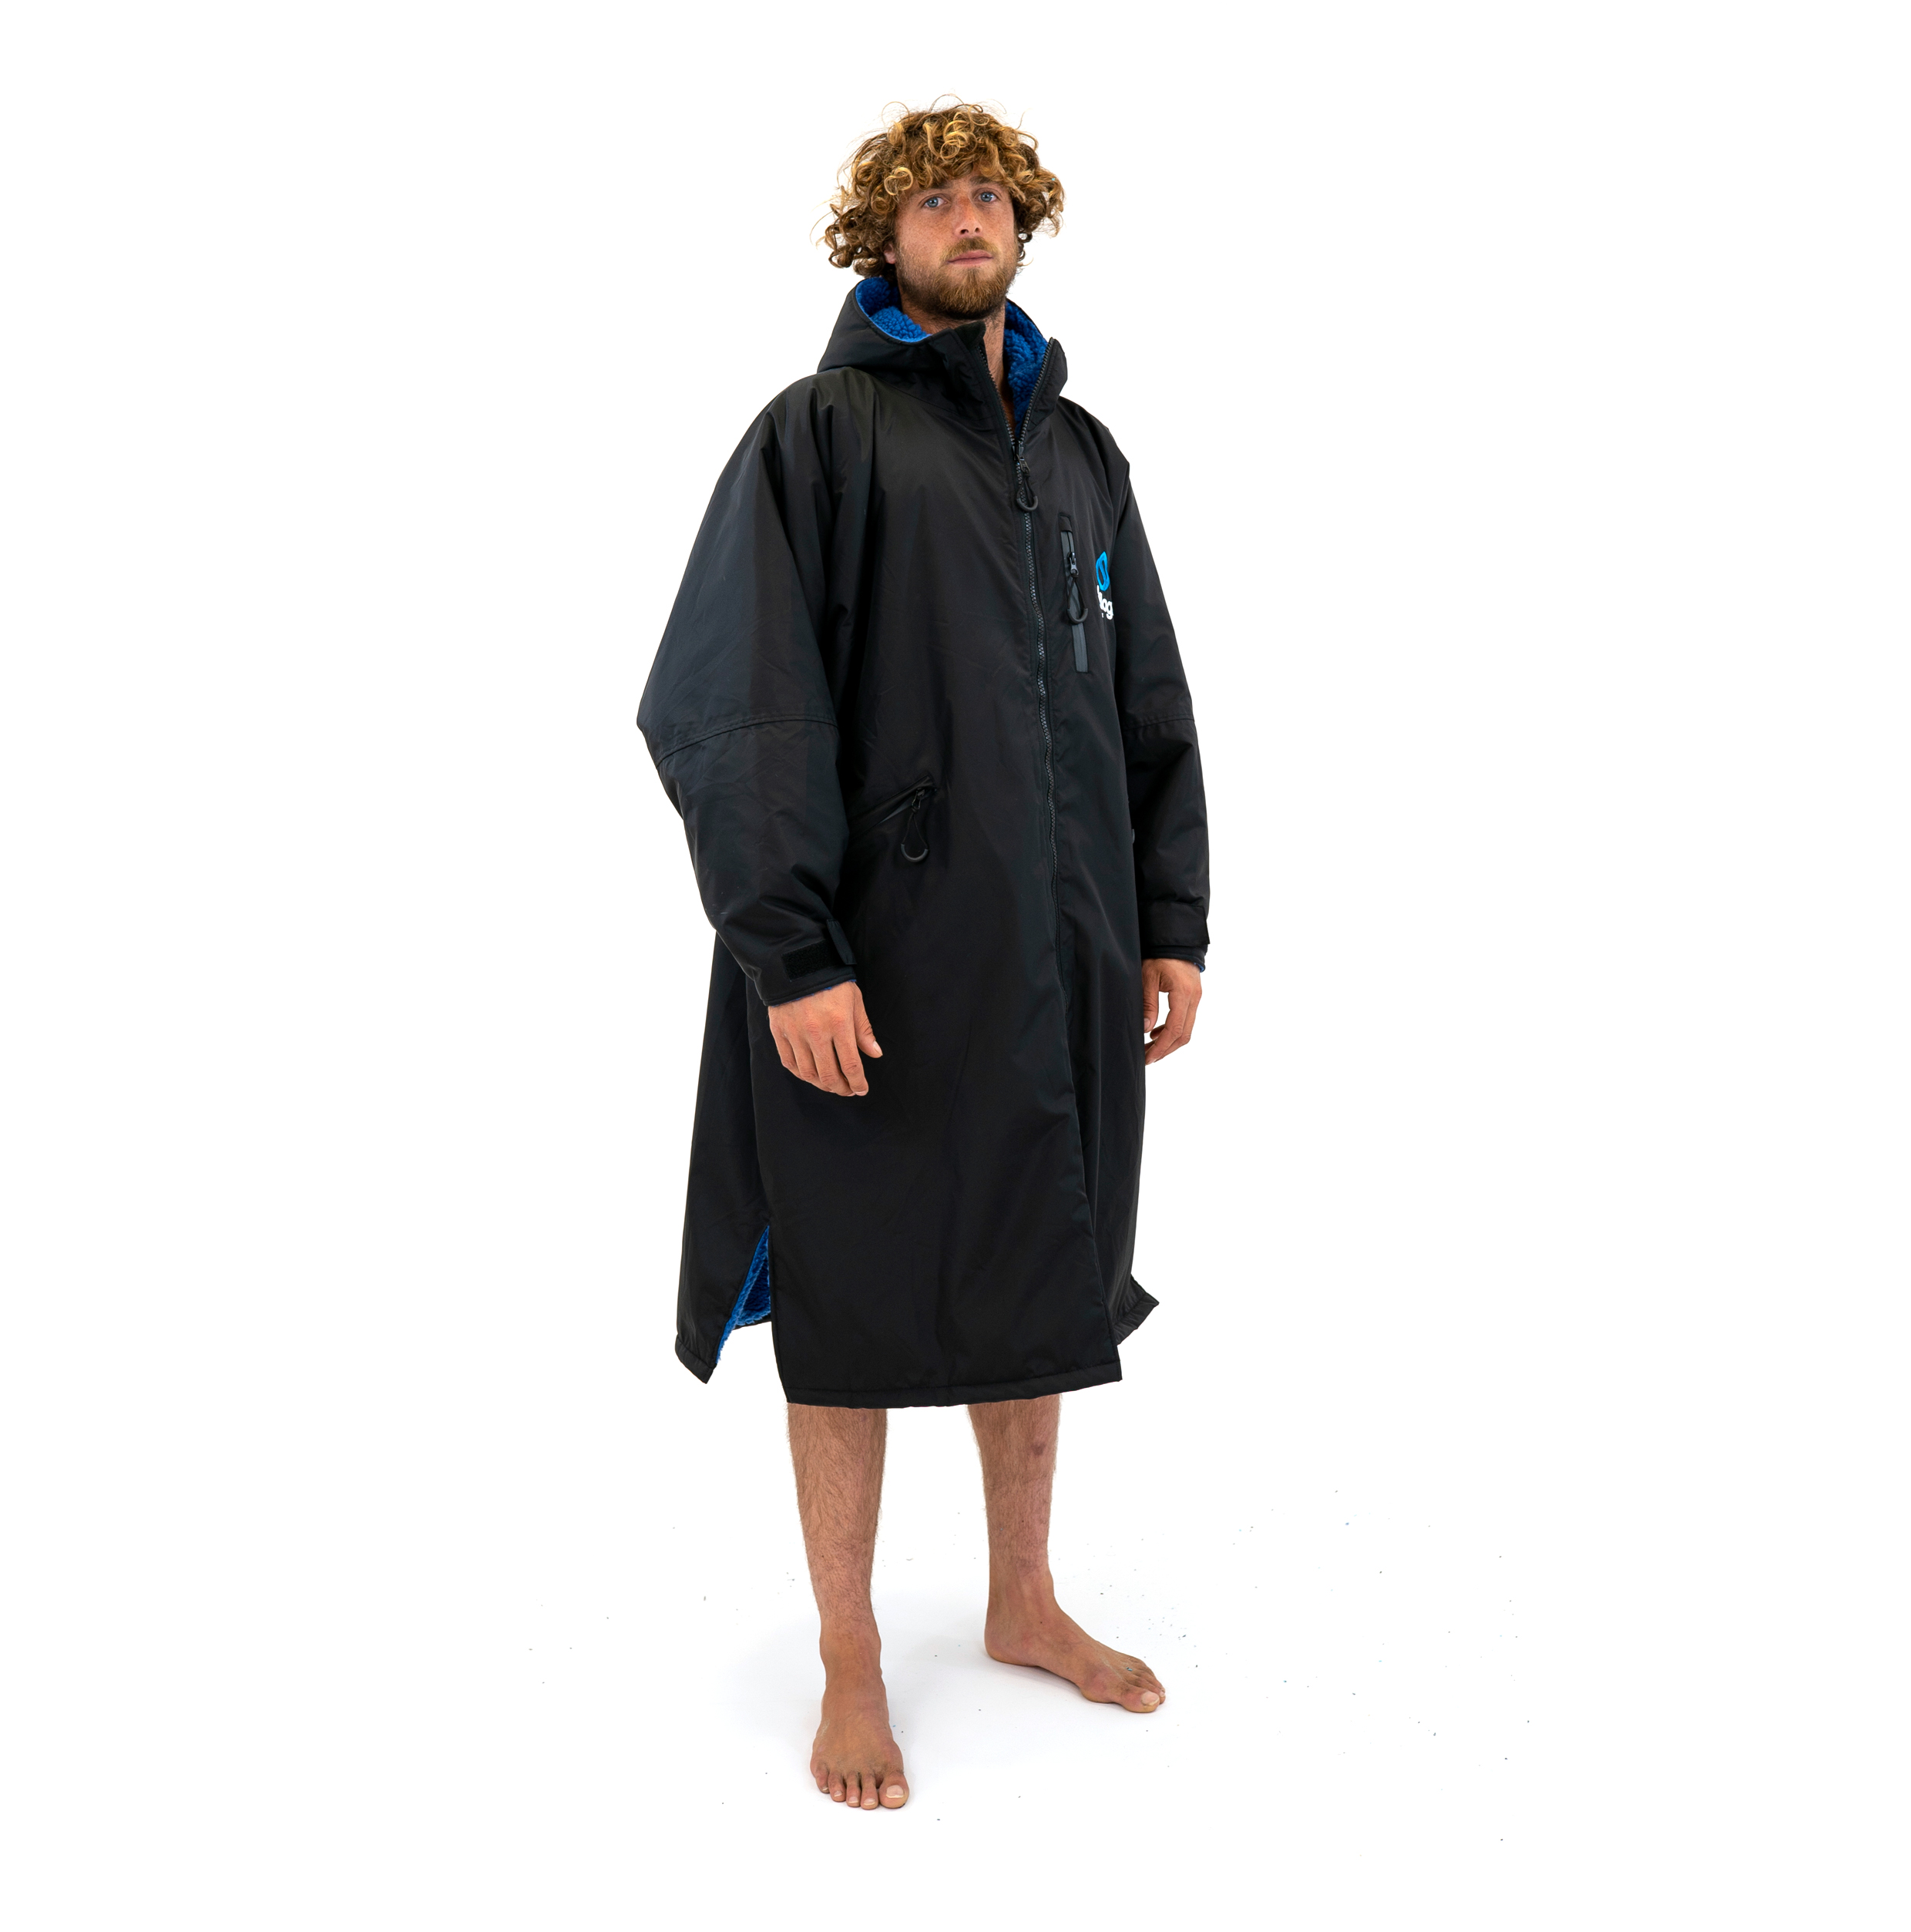 Surflogic Storm robe long sleeve (59825-28) - 2